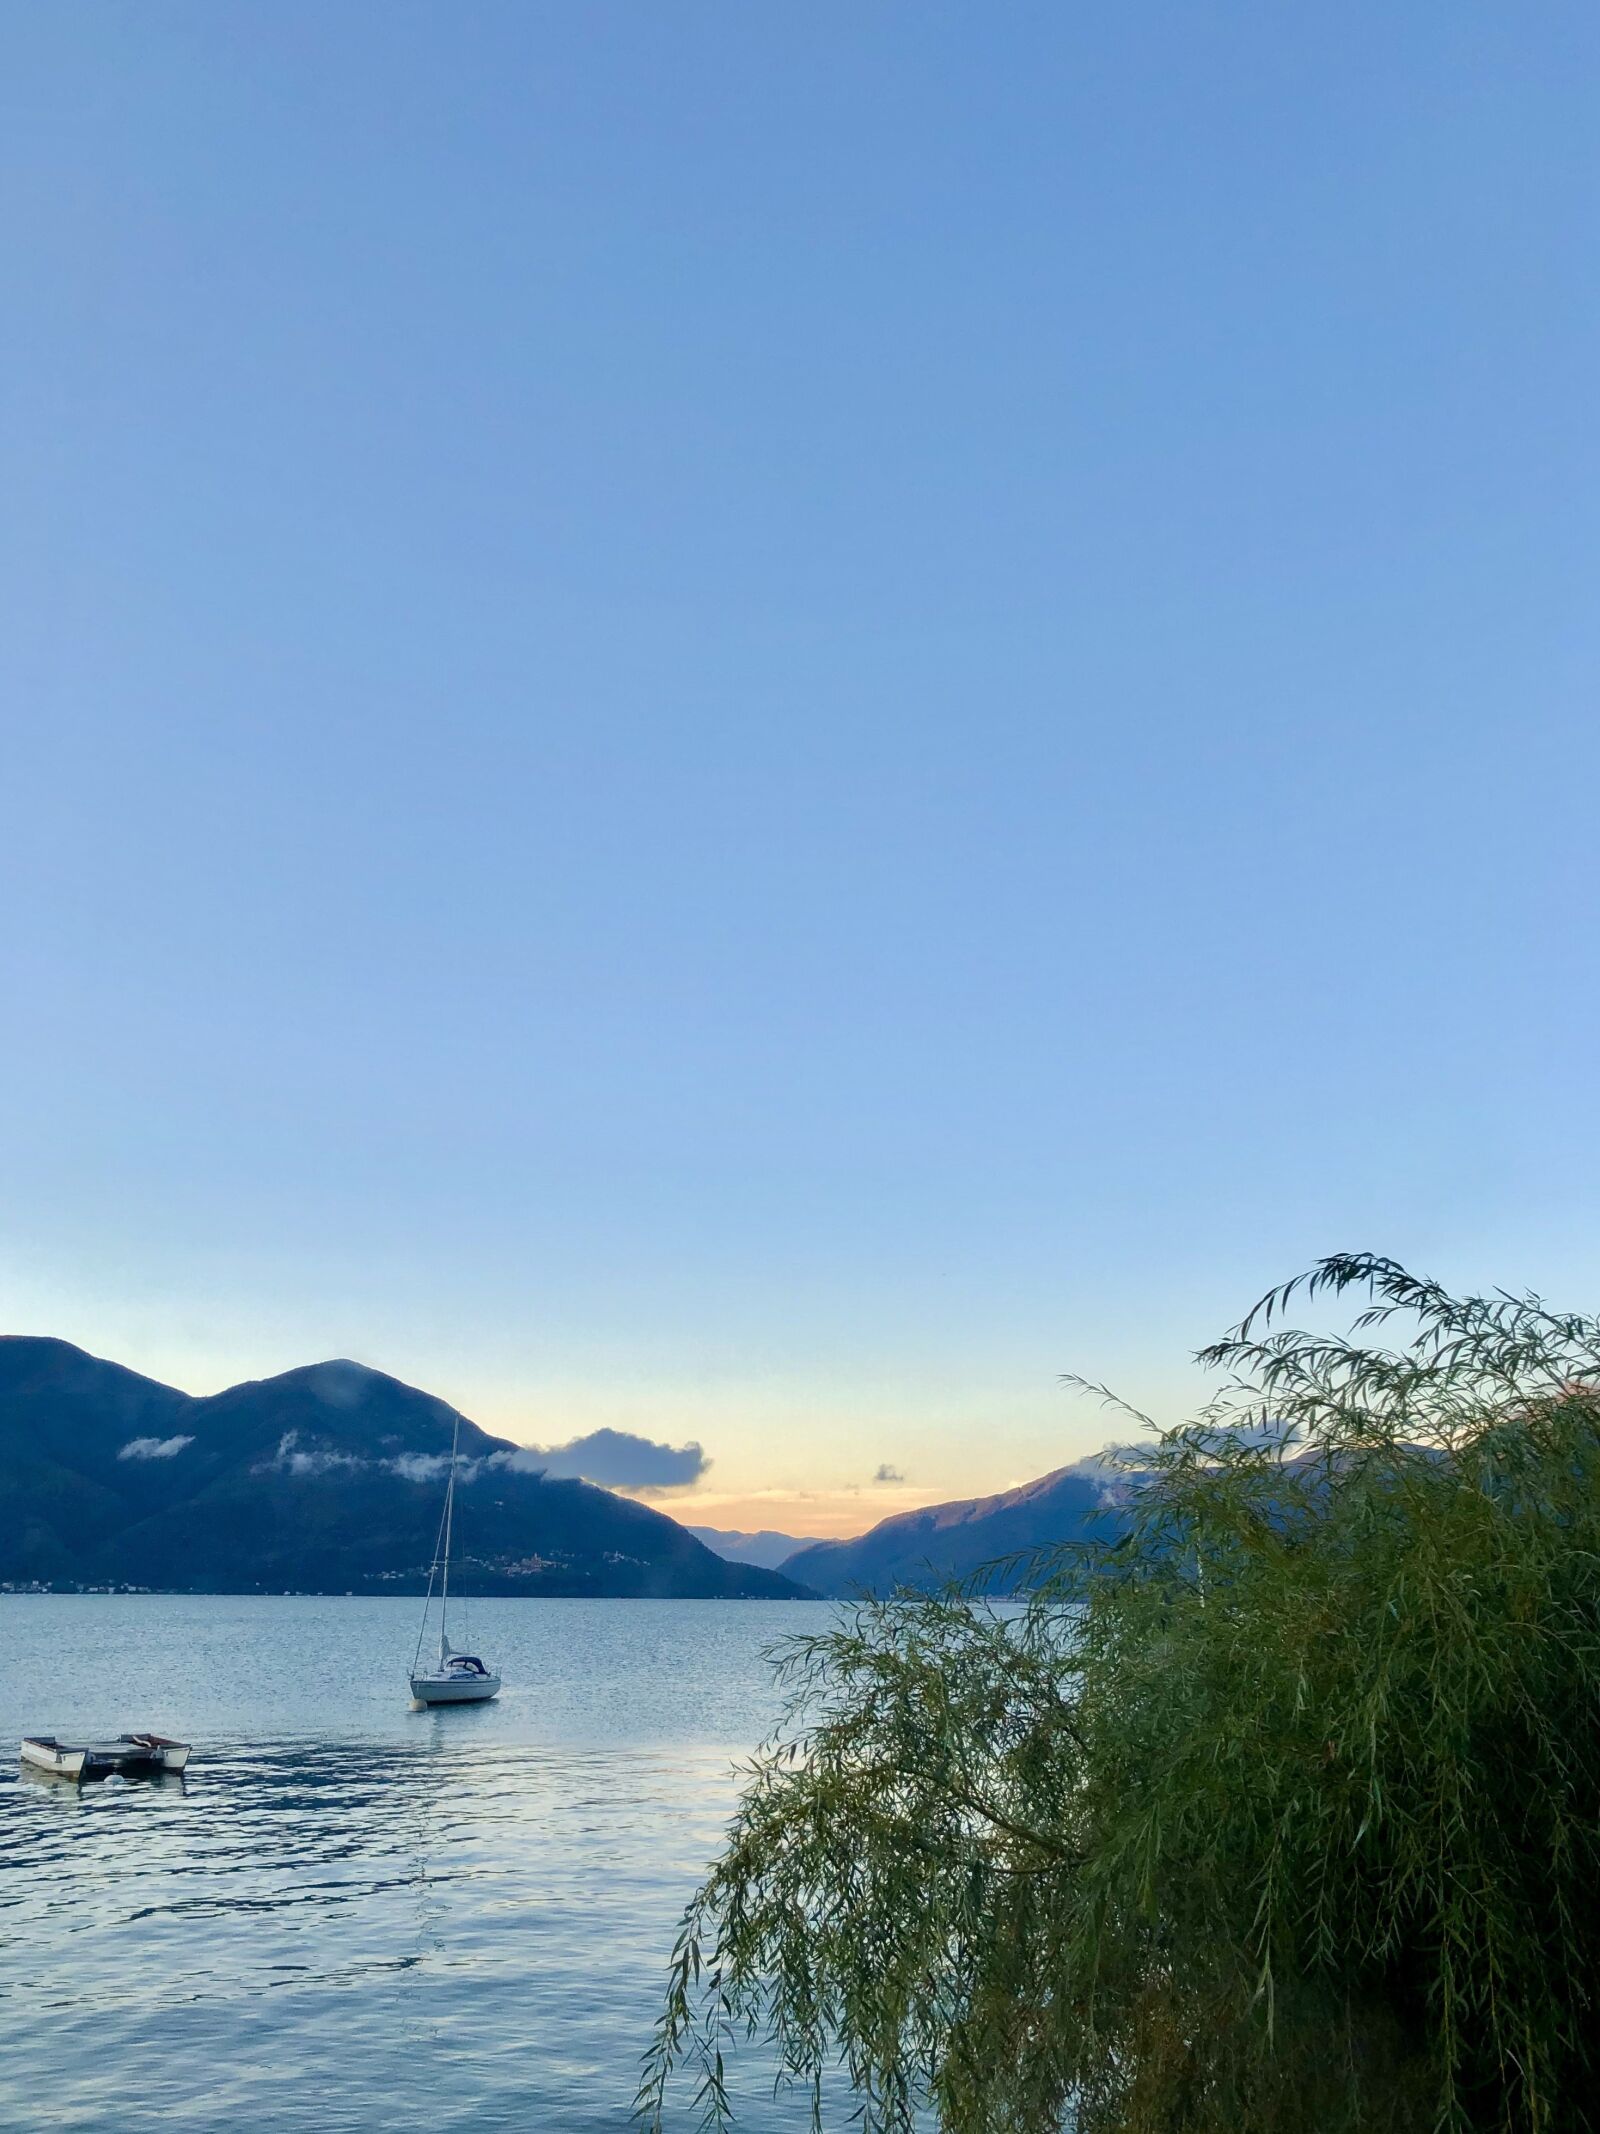 iPhone X back dual camera 4mm f/1.8 sample photo. Ticino, lago maggiore, sunset photography